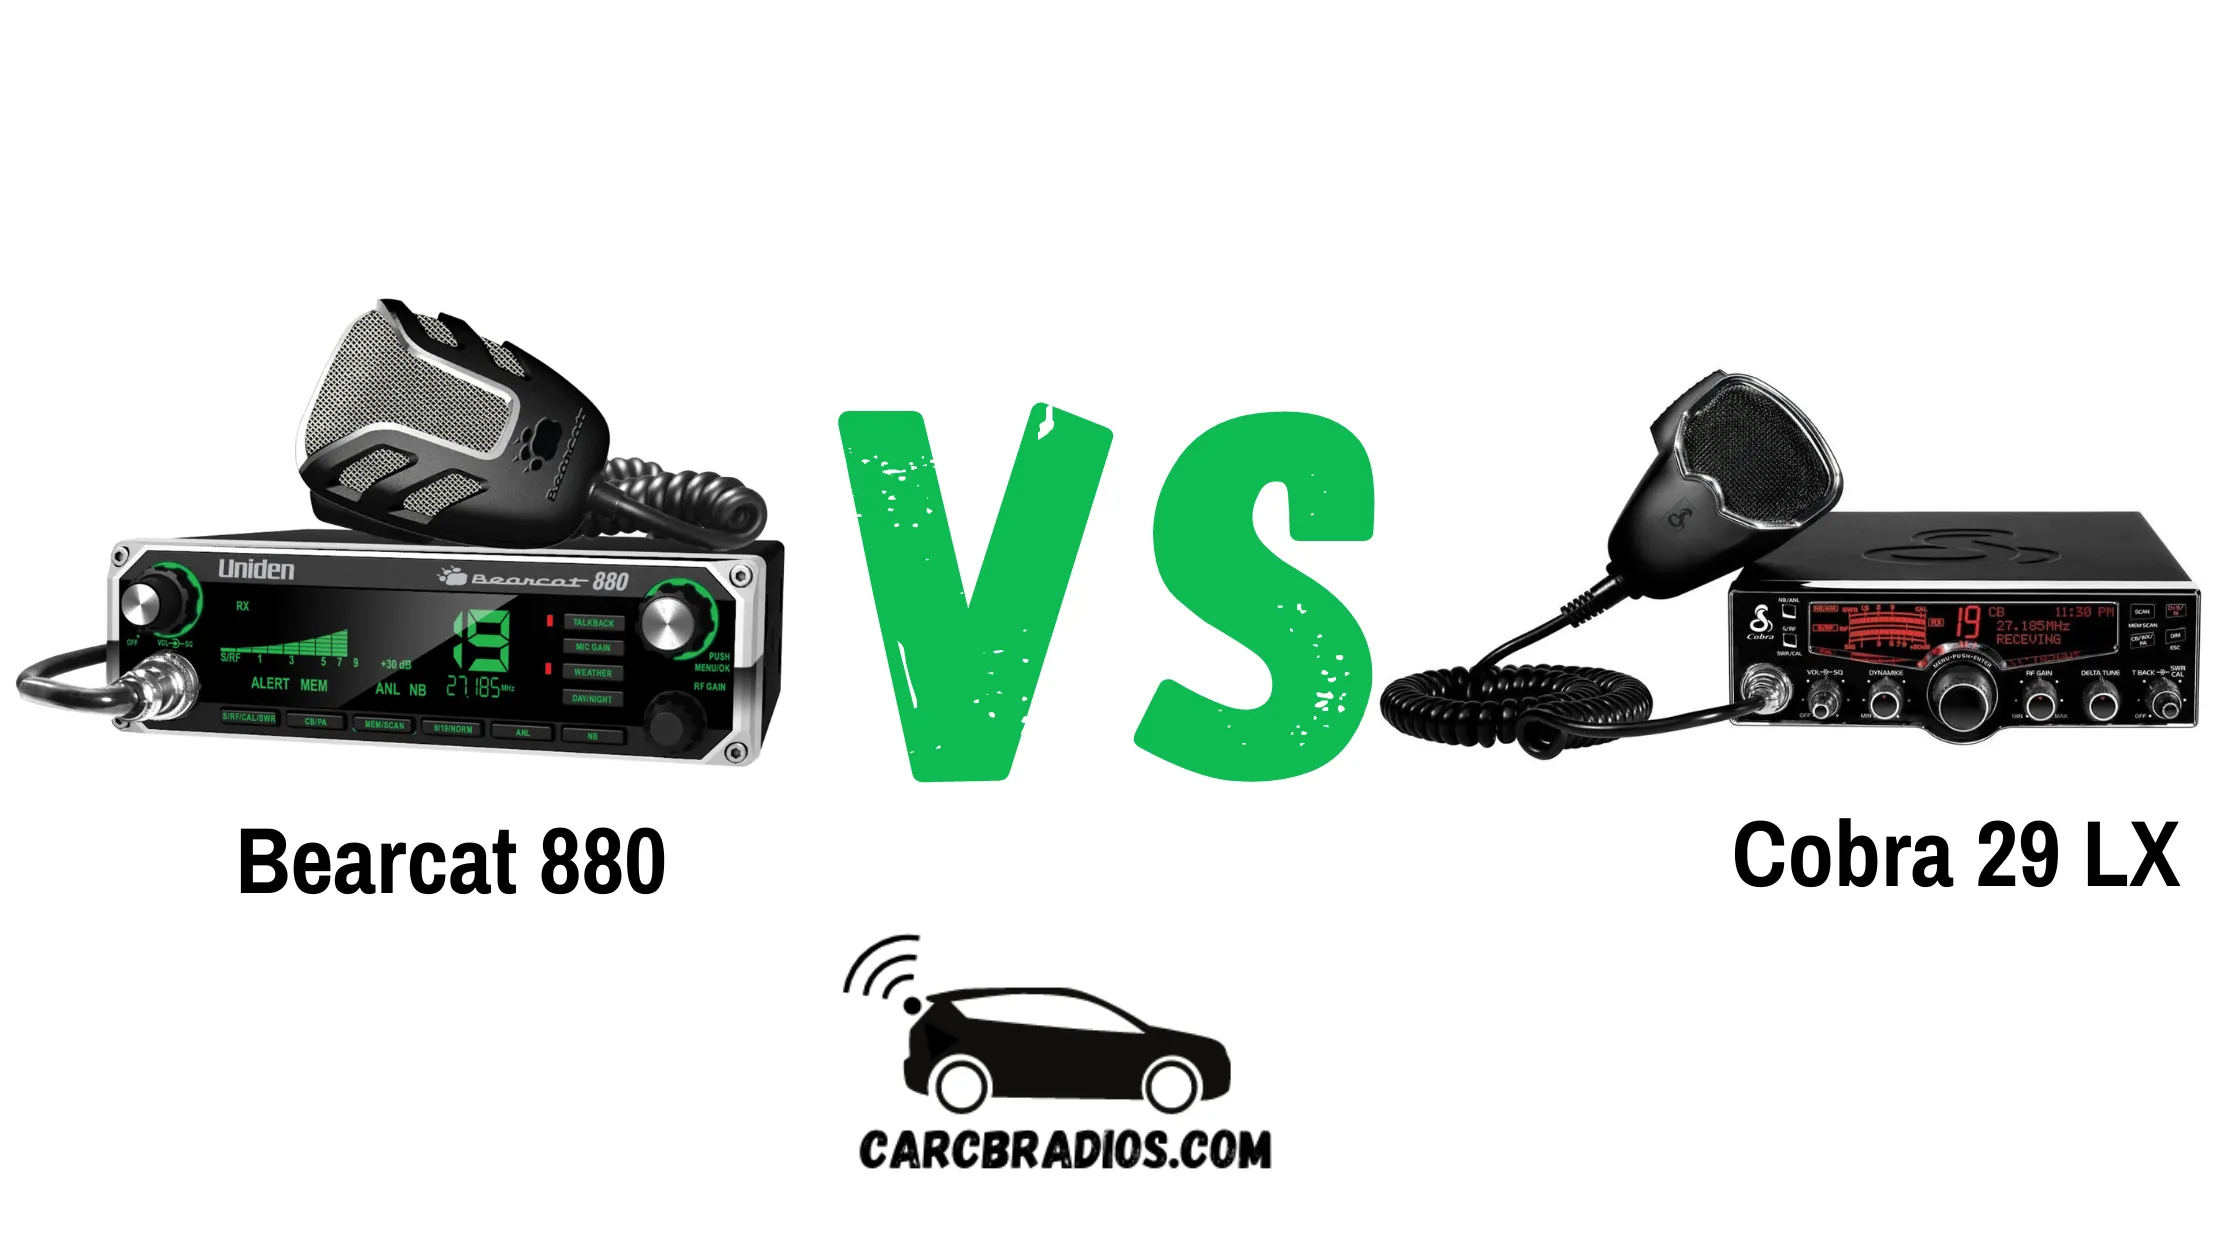 Bearcat 880 vs Cobra 29 LX: A Comparison of Two Popular CB Radios